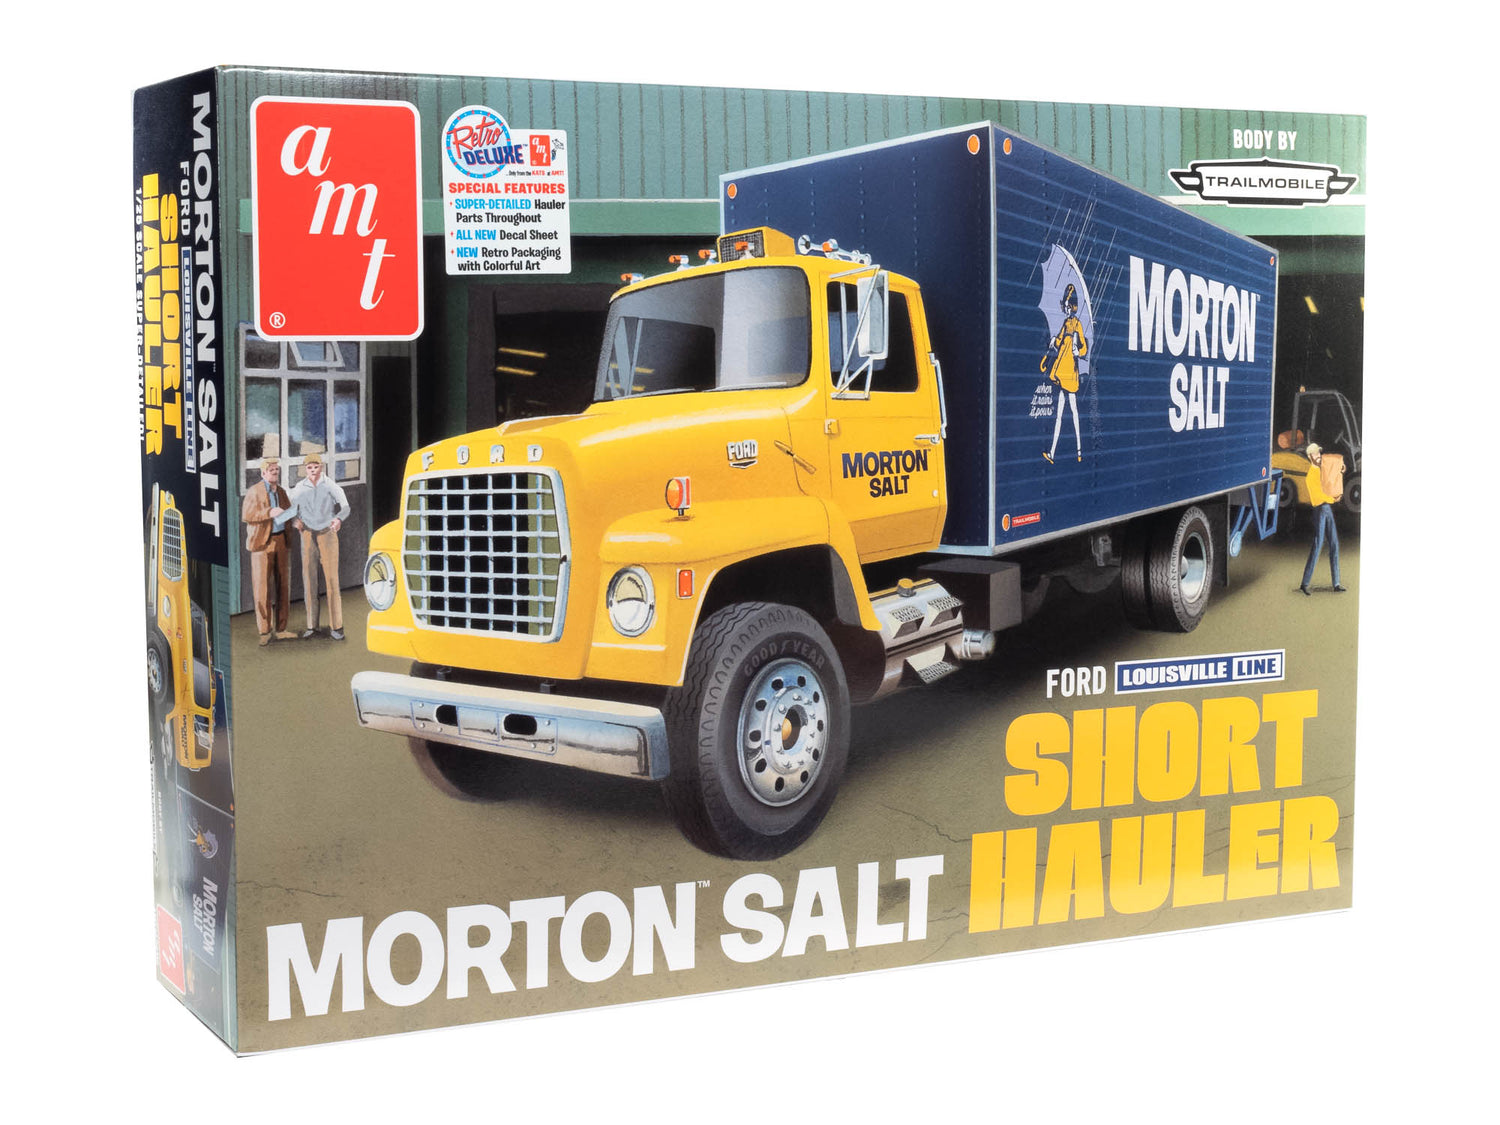 AMT Ford Louisville Short Hauler Morton Salt 1:25 Scale Model Kit